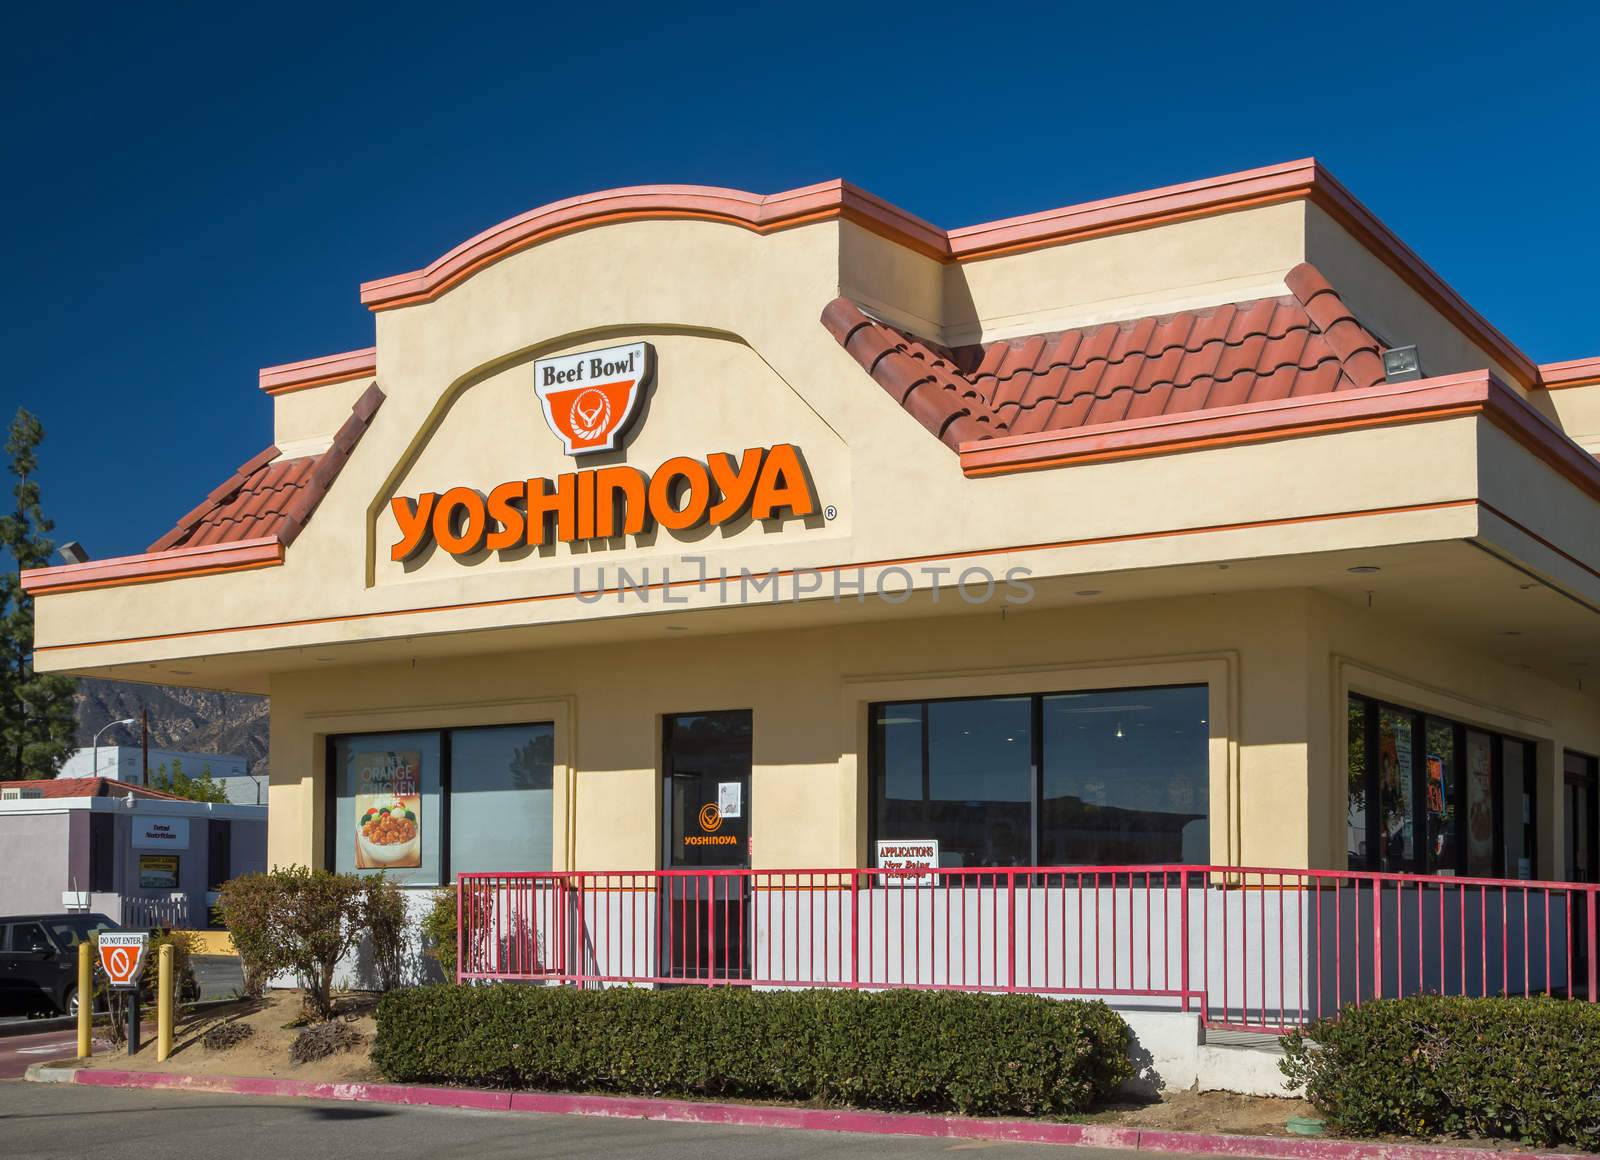 LOS ANGELES, CA/USA - NOVEMBER 22, 2015: Yoshinoya Beef Bowl restaurant exterior. Yoshinoya is a Japanese fast food chain restaurant chain.